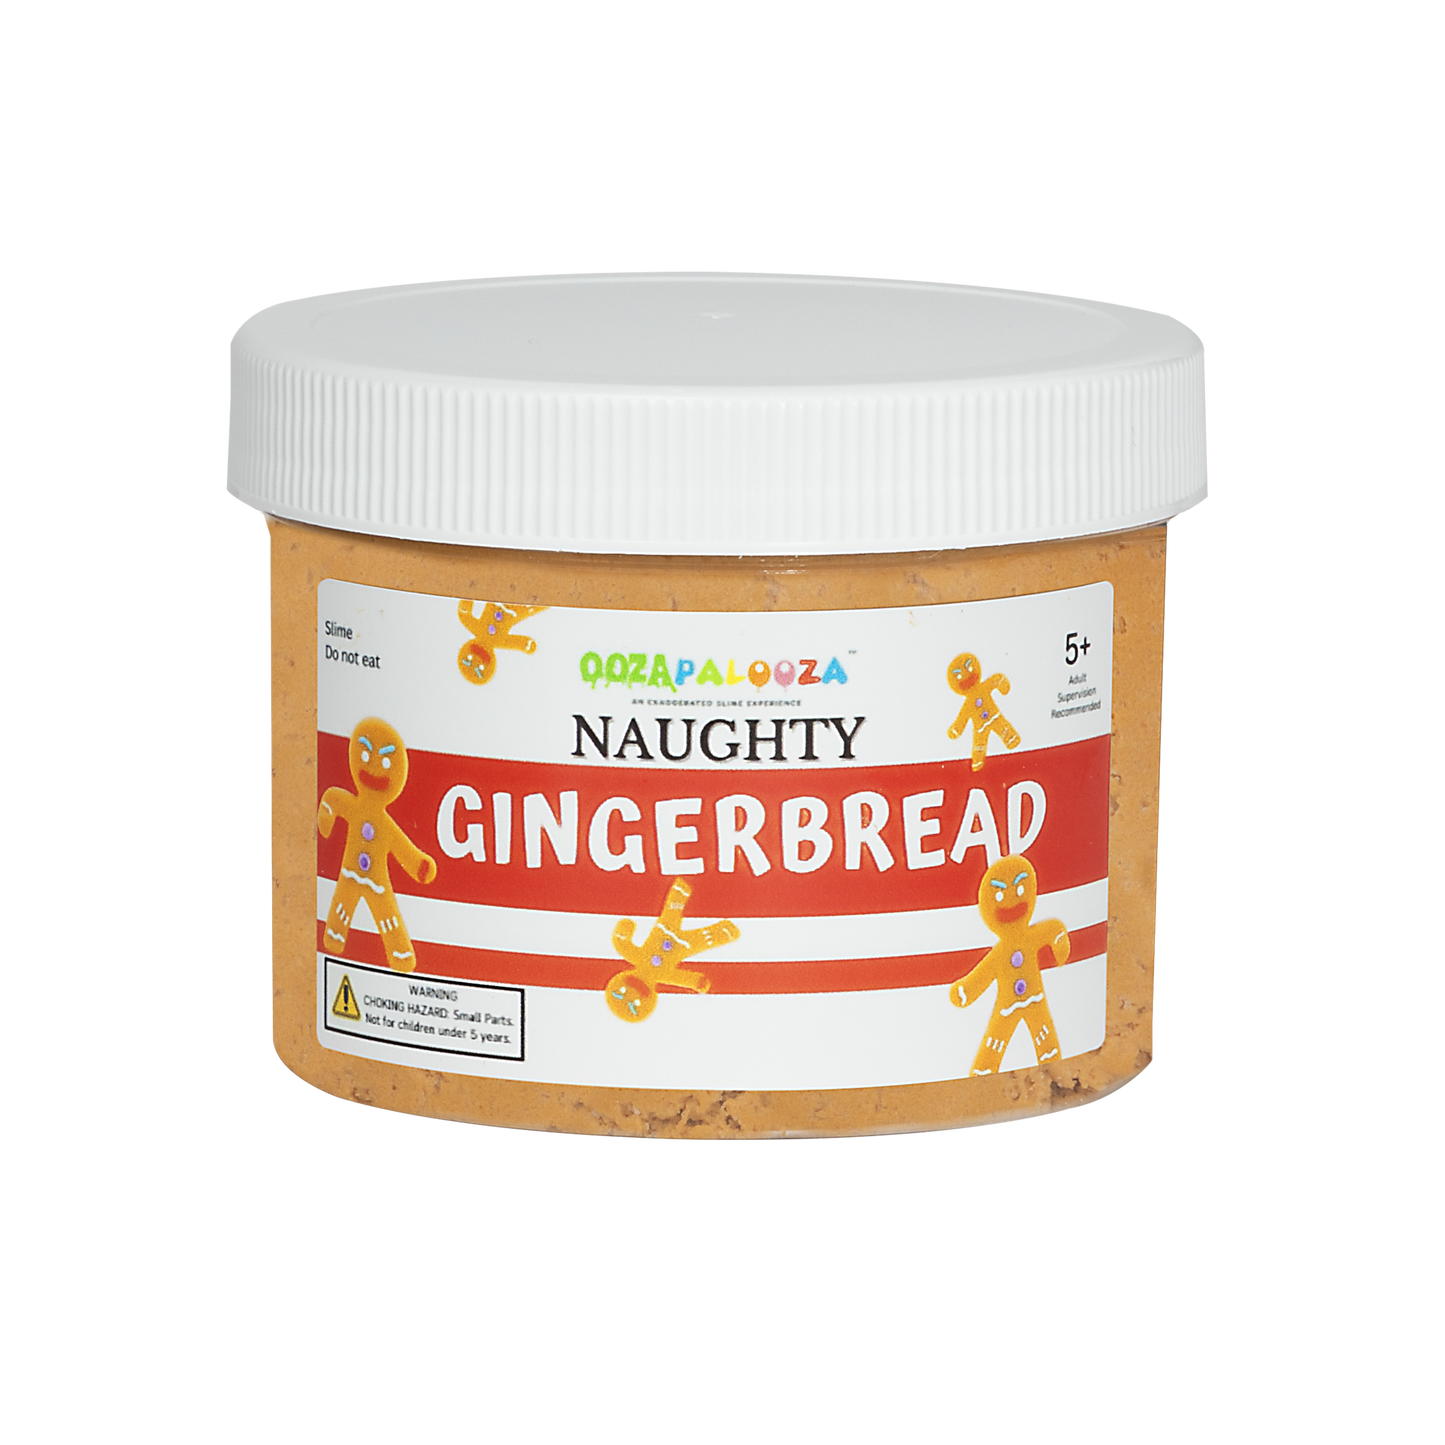 Naughty Gingerbread